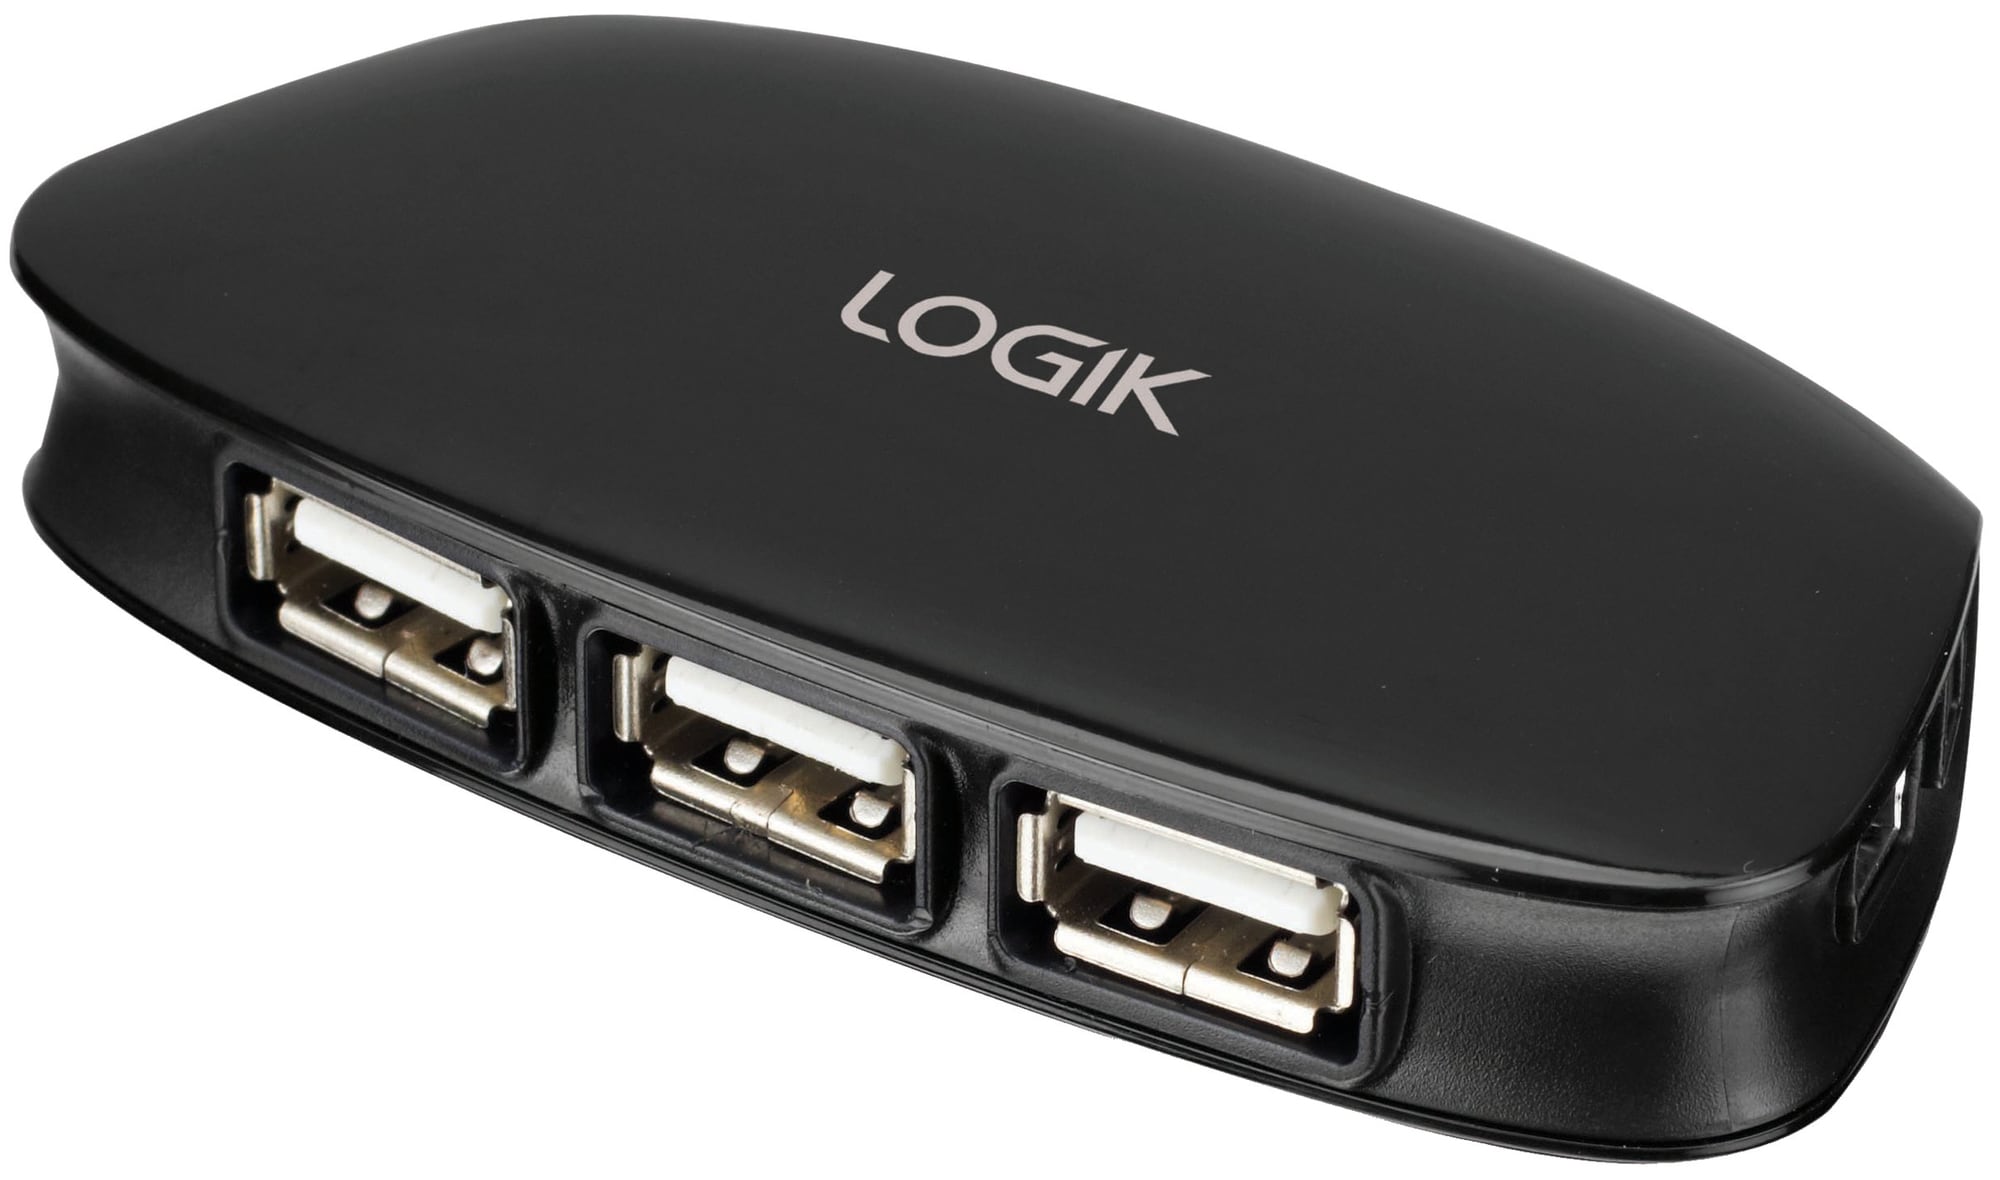 Logik 4-port USB 2.0 | Elgiganten